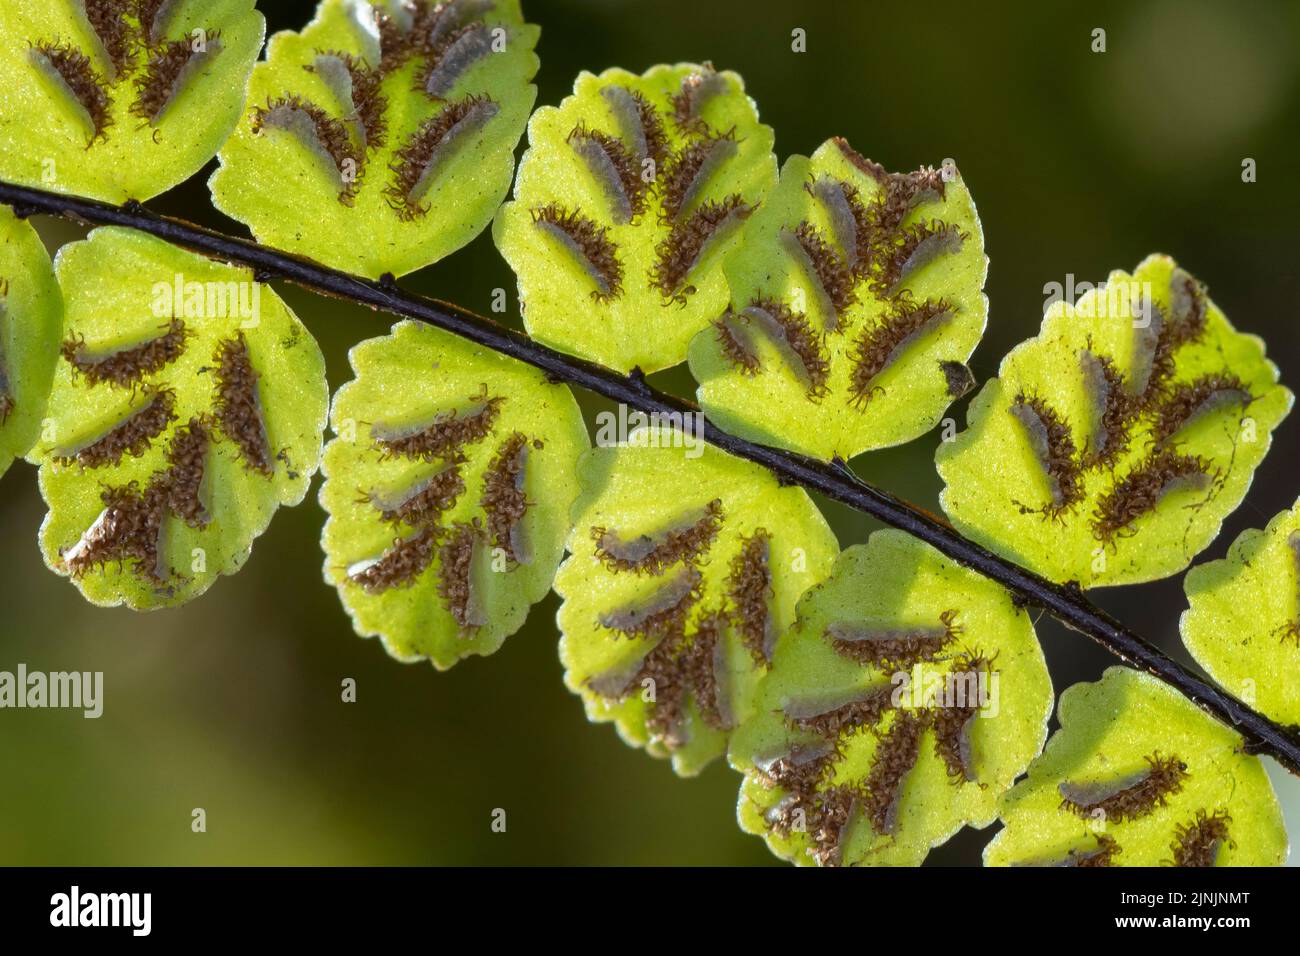 Maidenhair spleenwort, Common maidenhair (Asplenium trichomanes), sporangia in sori on the underside of the leaf, Germany Stock Photo